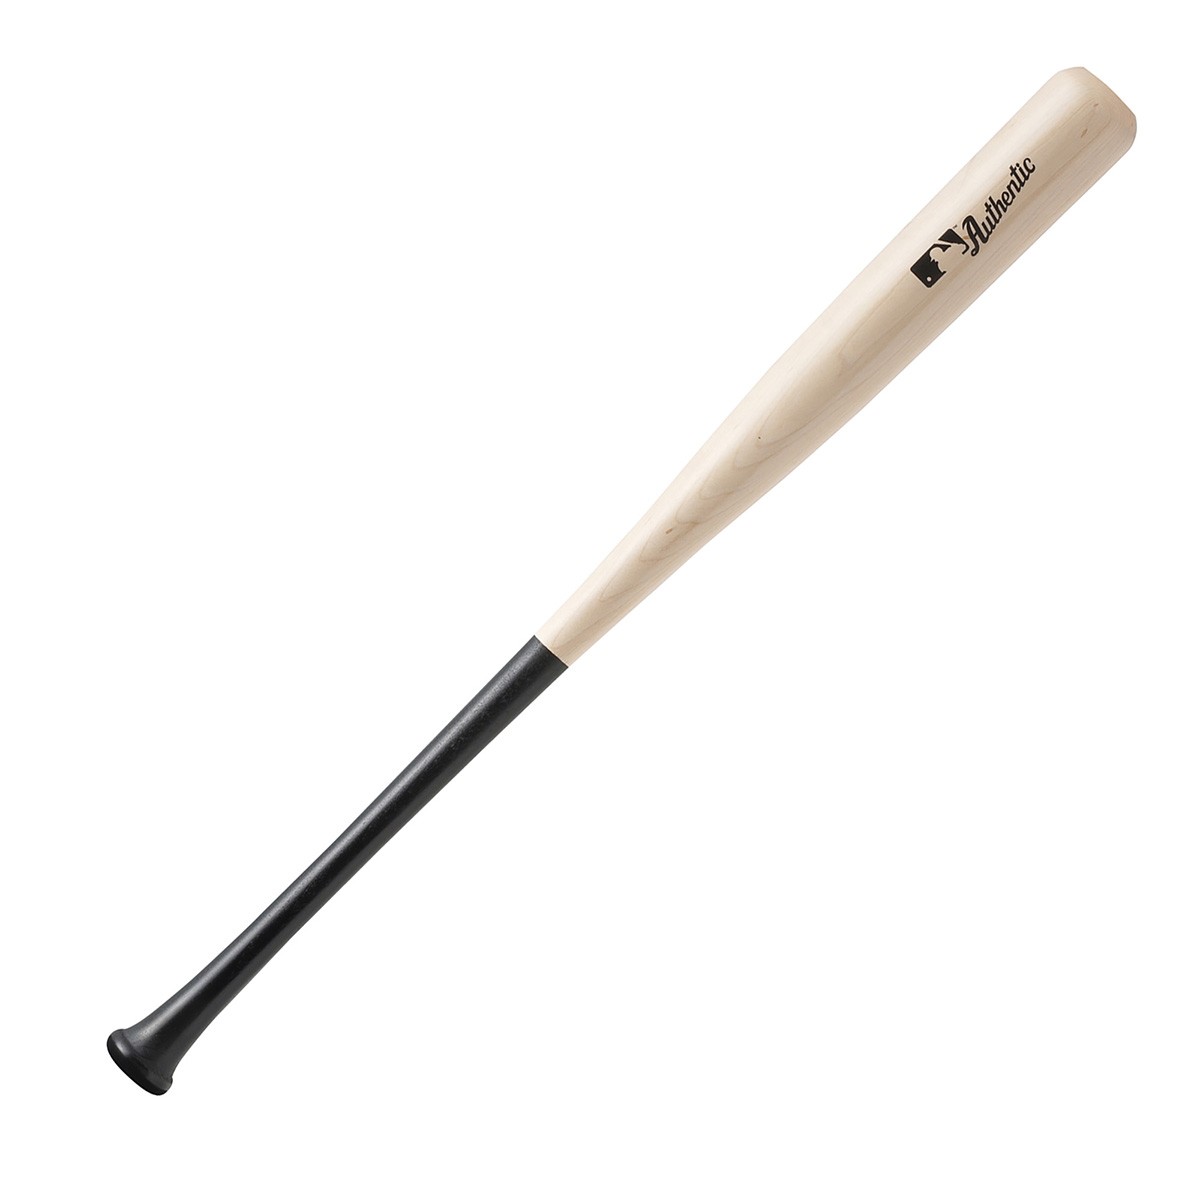 louisville-slugger-genuine-series-3-maple-i13-wood-baseball-bat-33-inch LW3MI13A16-33inch Louisville 887768508883 Baseballs biggest hitters choose maple for its harder hitting surface and